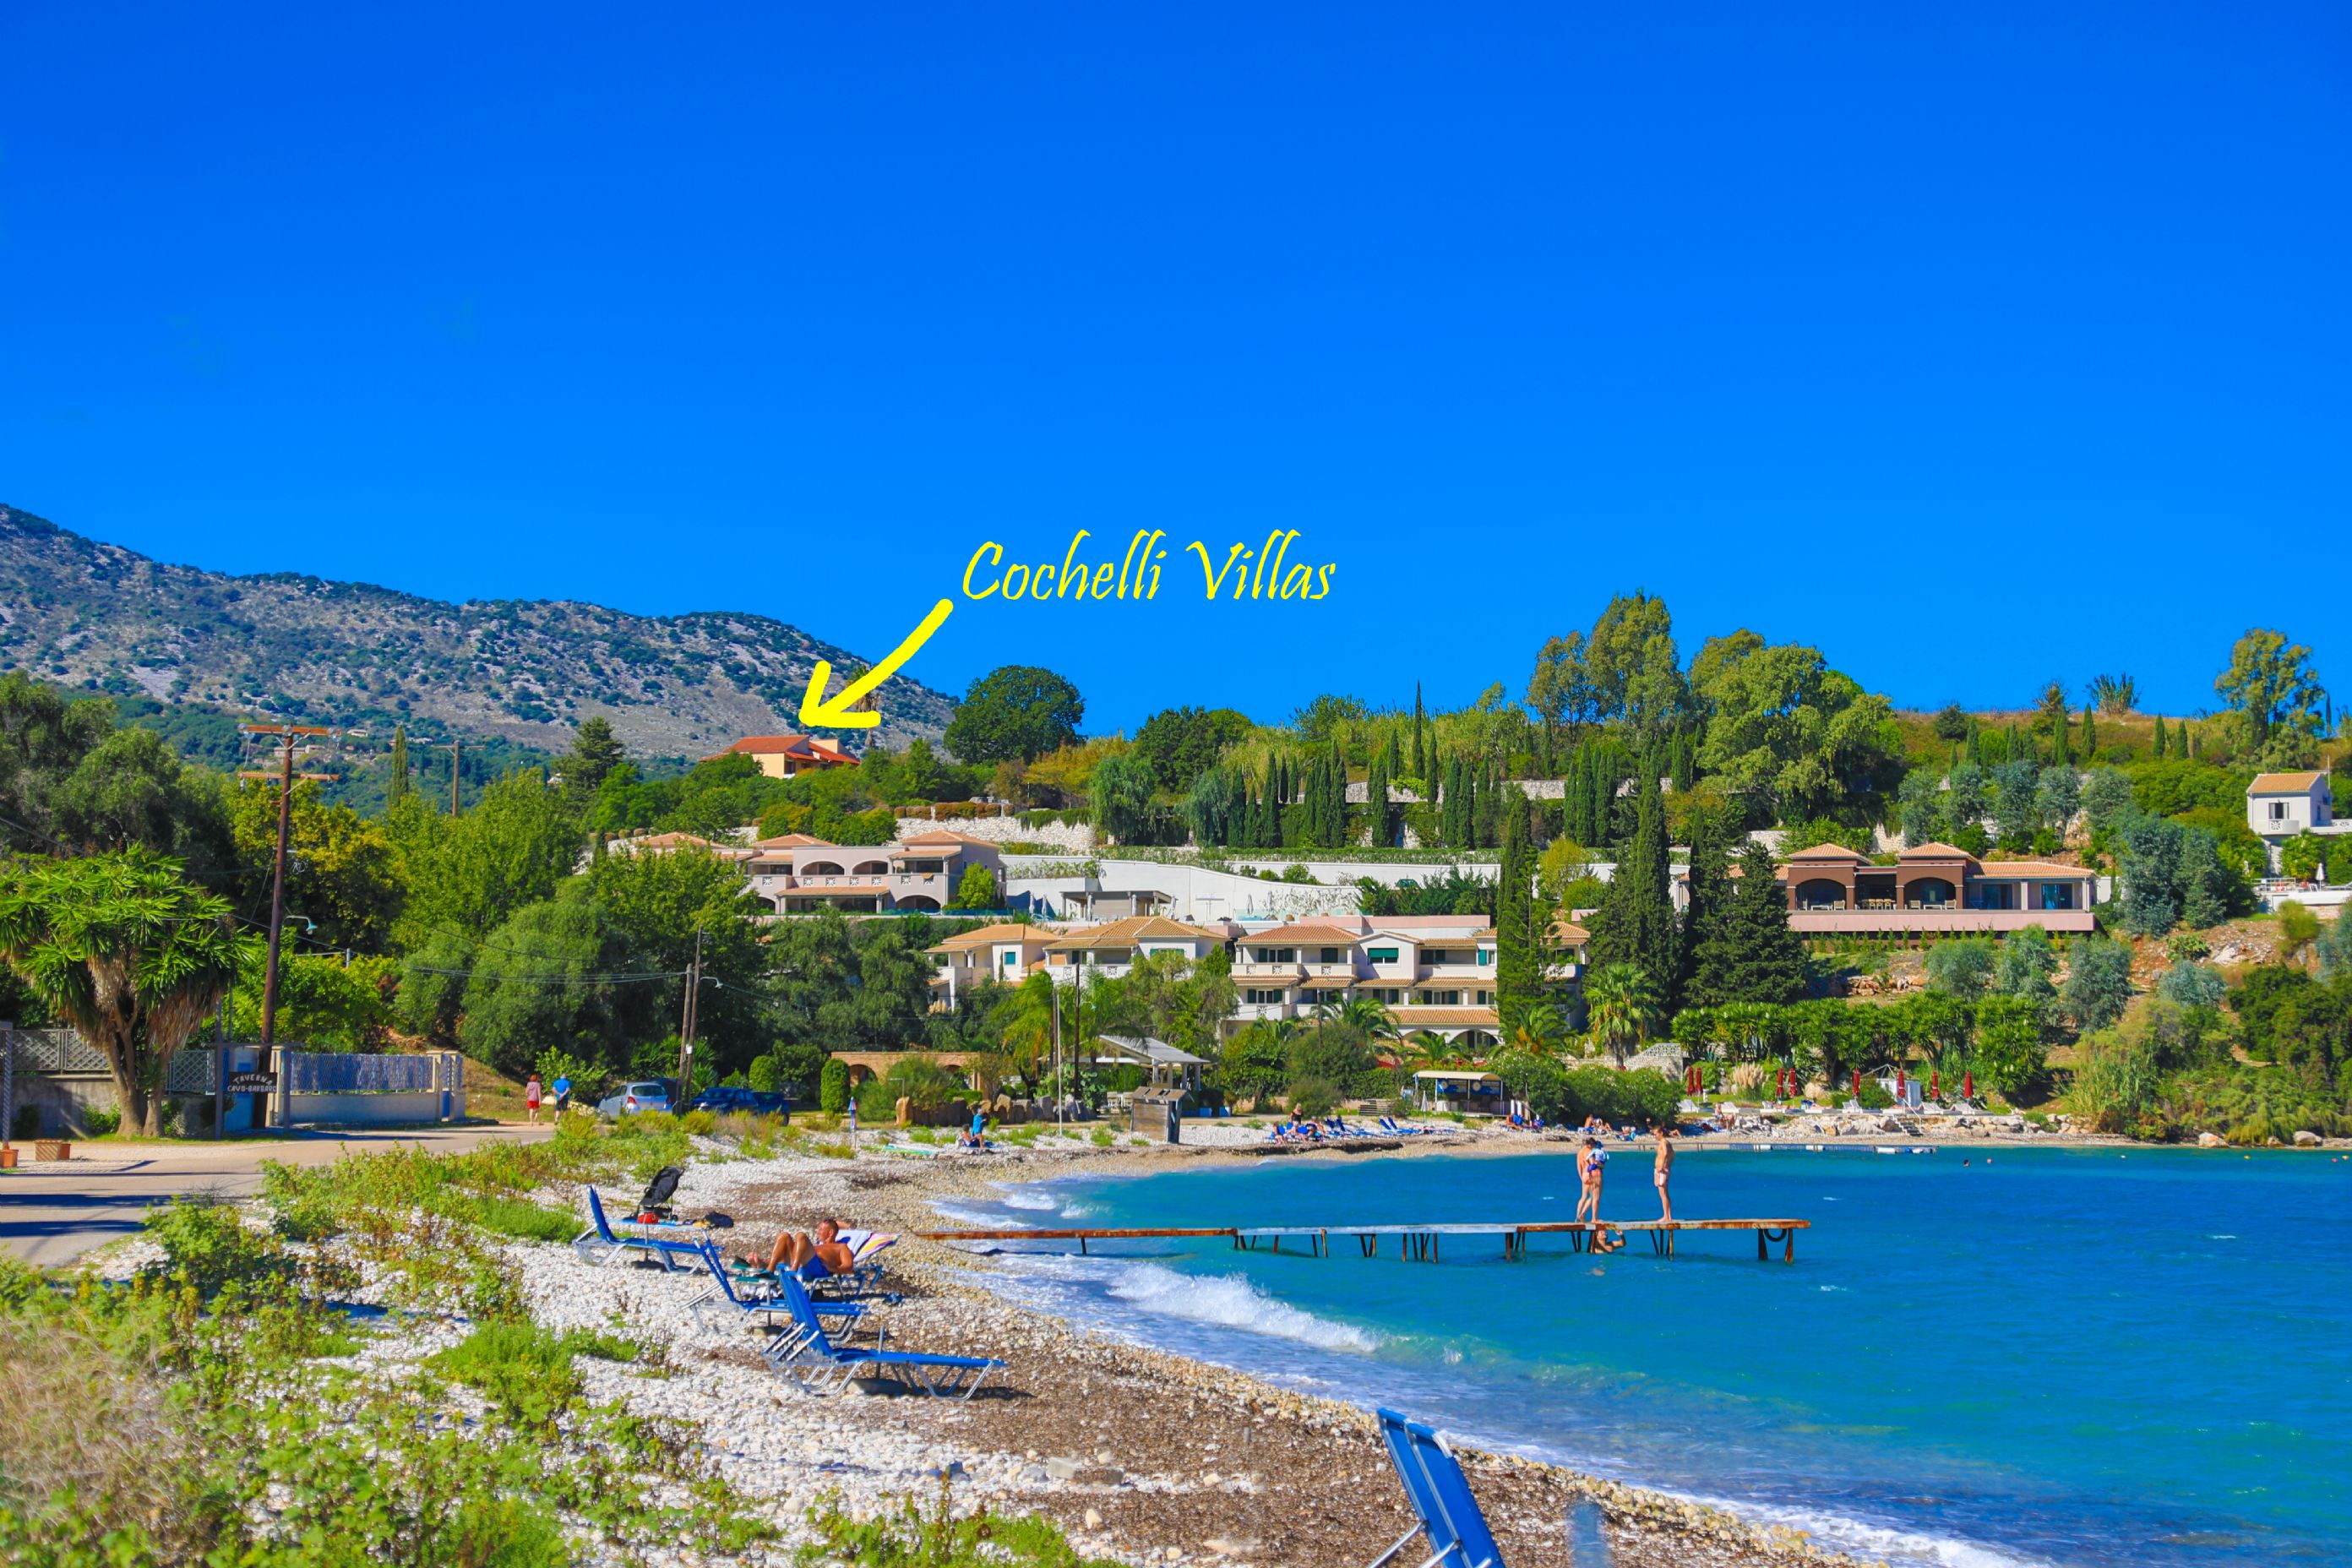 Cochelli Villas is just 300m from Avalaki Beach